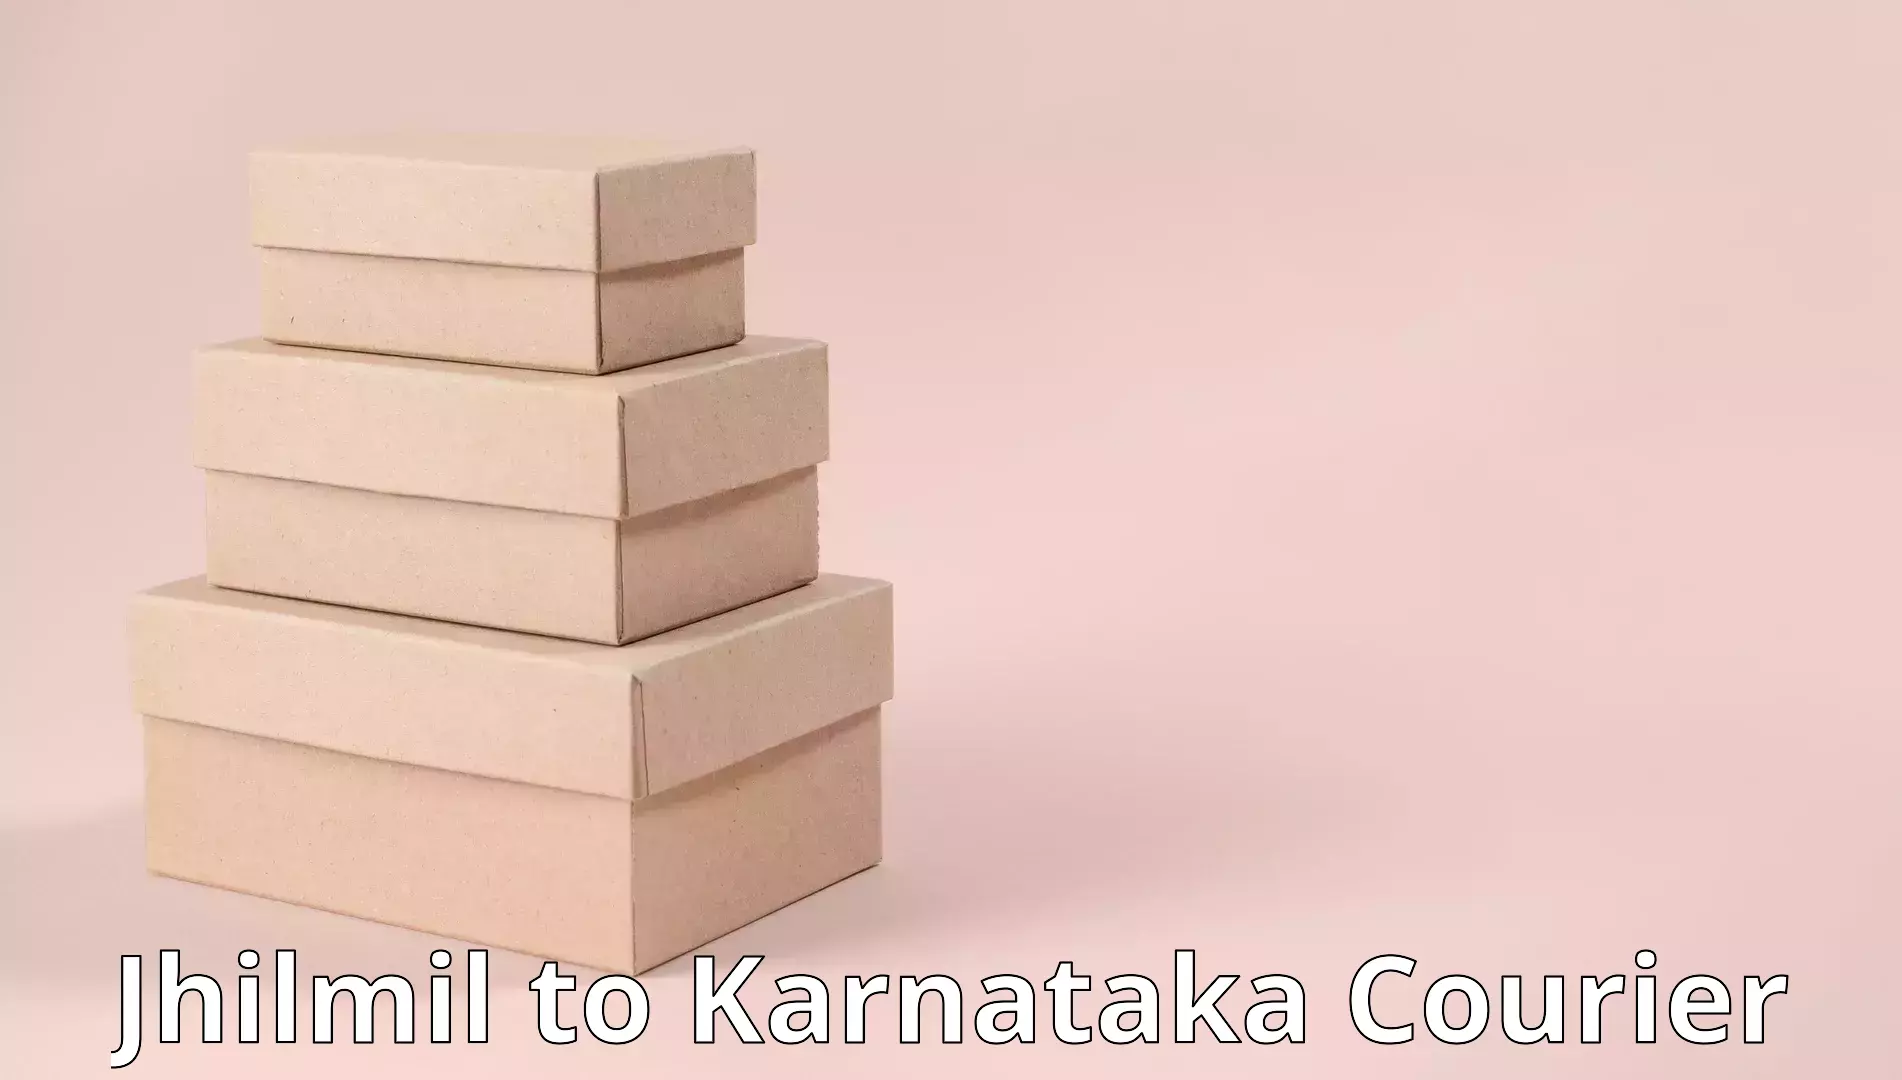 Efficient relocation services Jhilmil to Karnataka